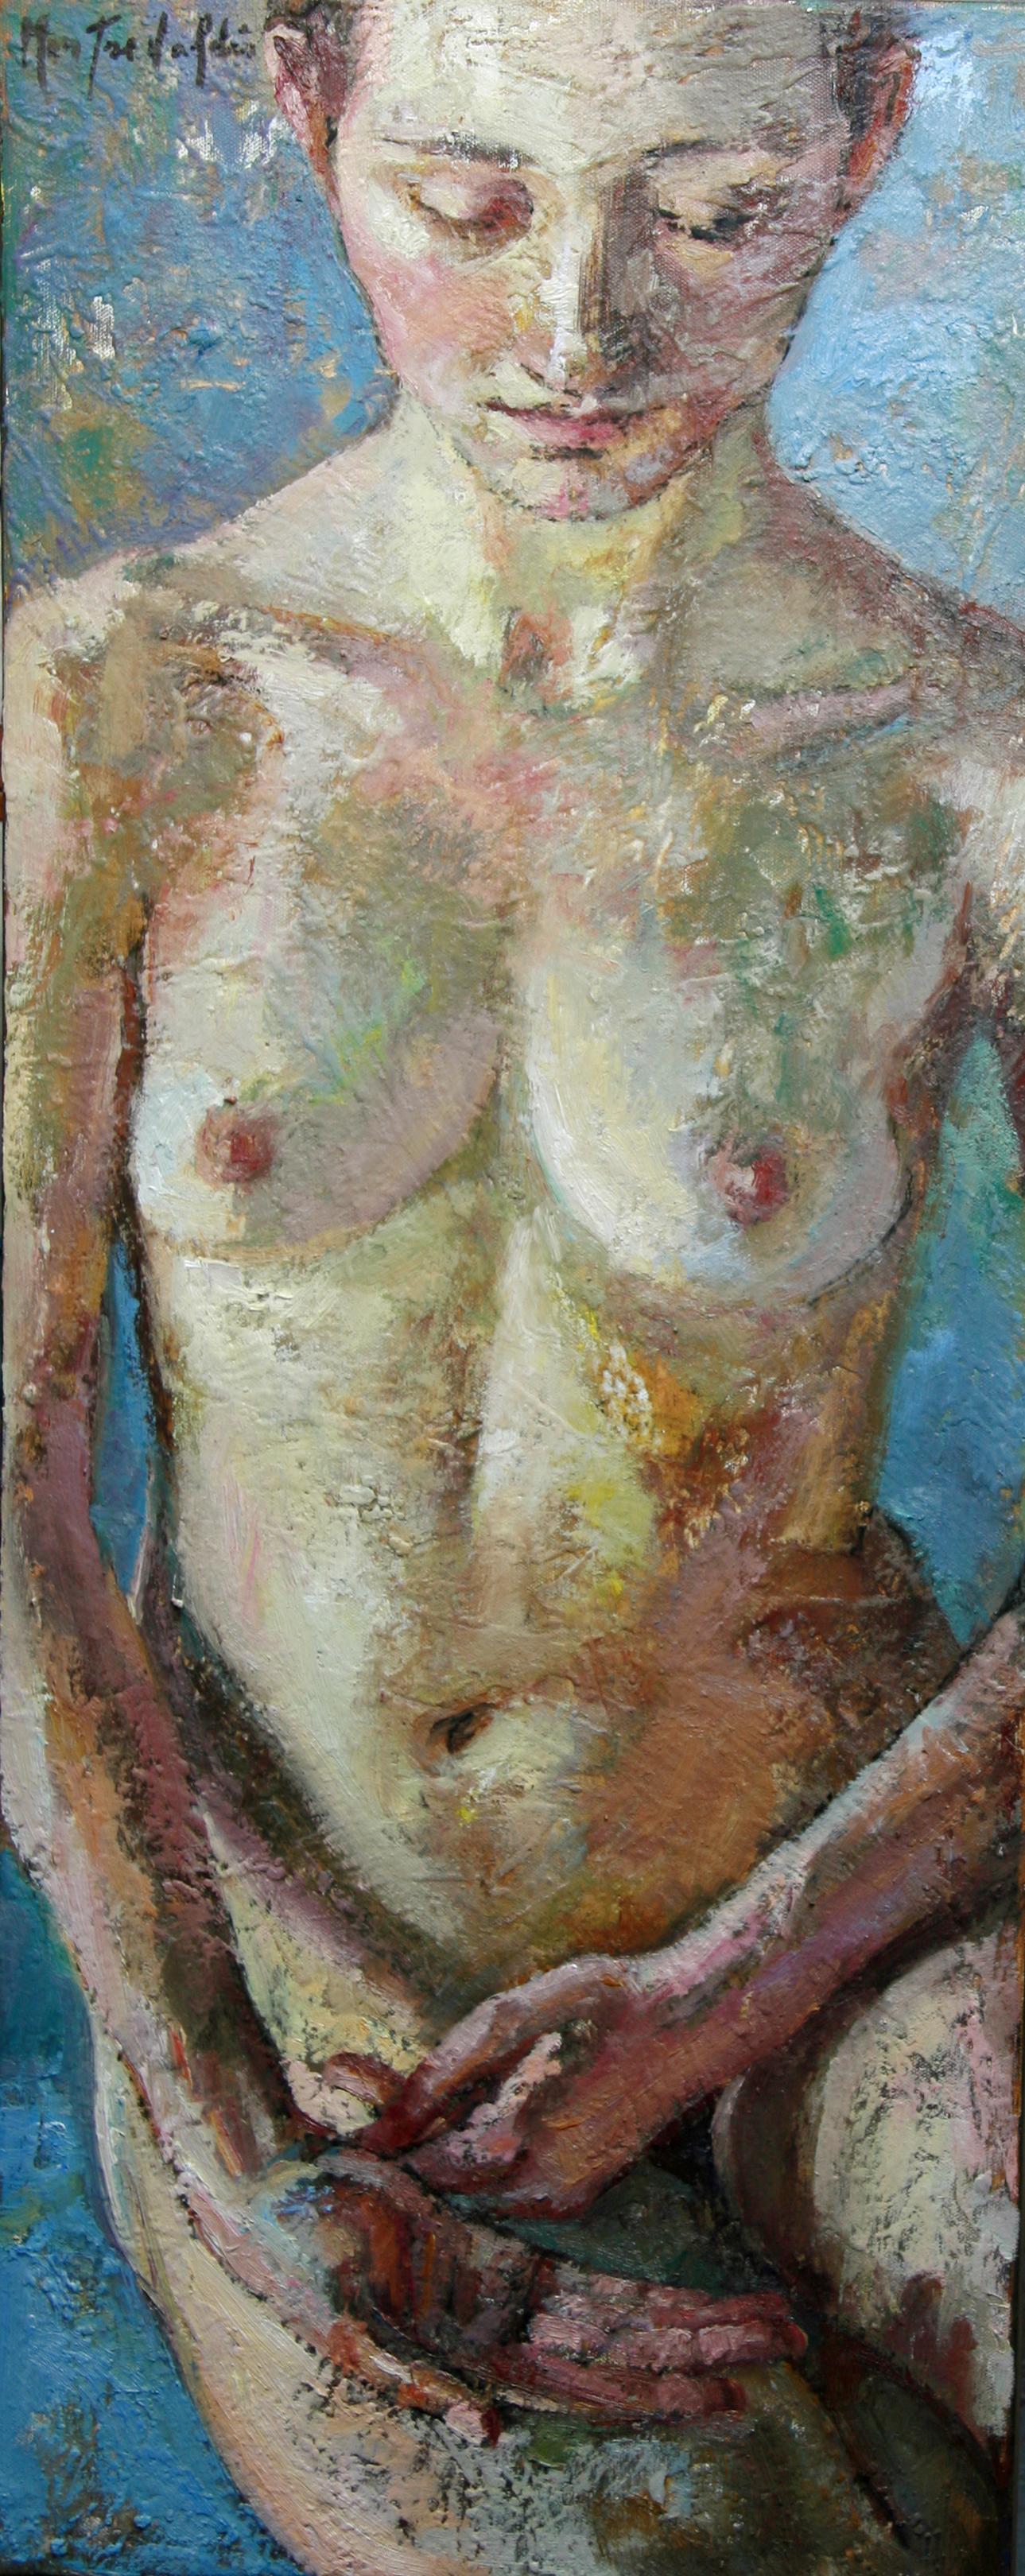 Montse Valdés Portrait Painting - 3-4-9 - 21st Century, Contemporary, Nude Painting, Oil on Canvas